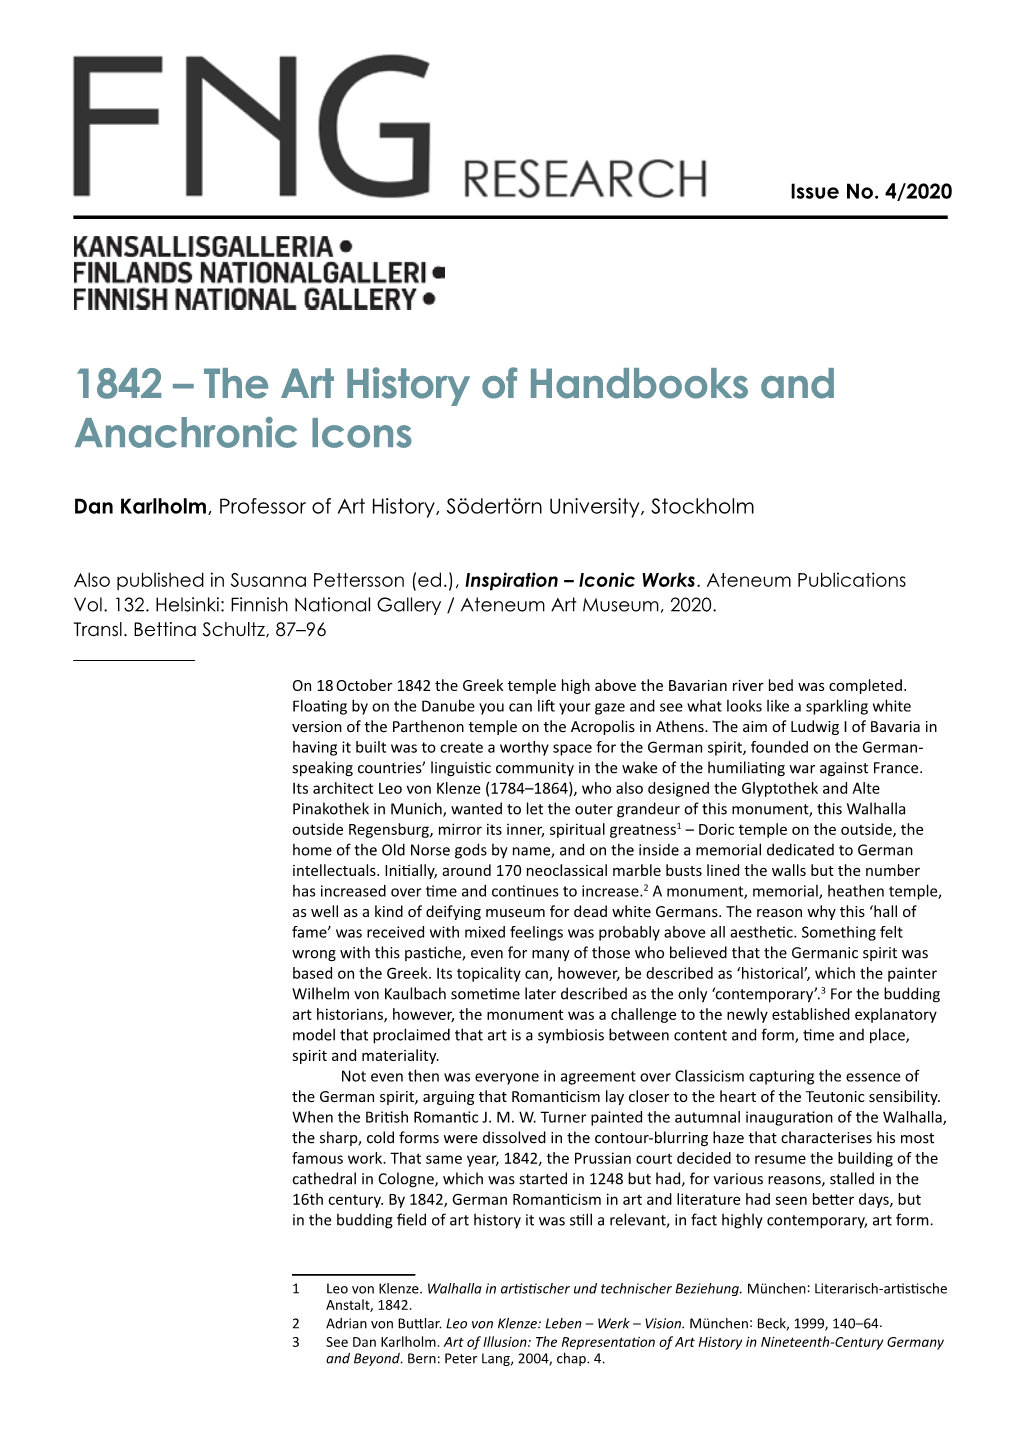 The Art History of Handbooks and Anachronic Icons